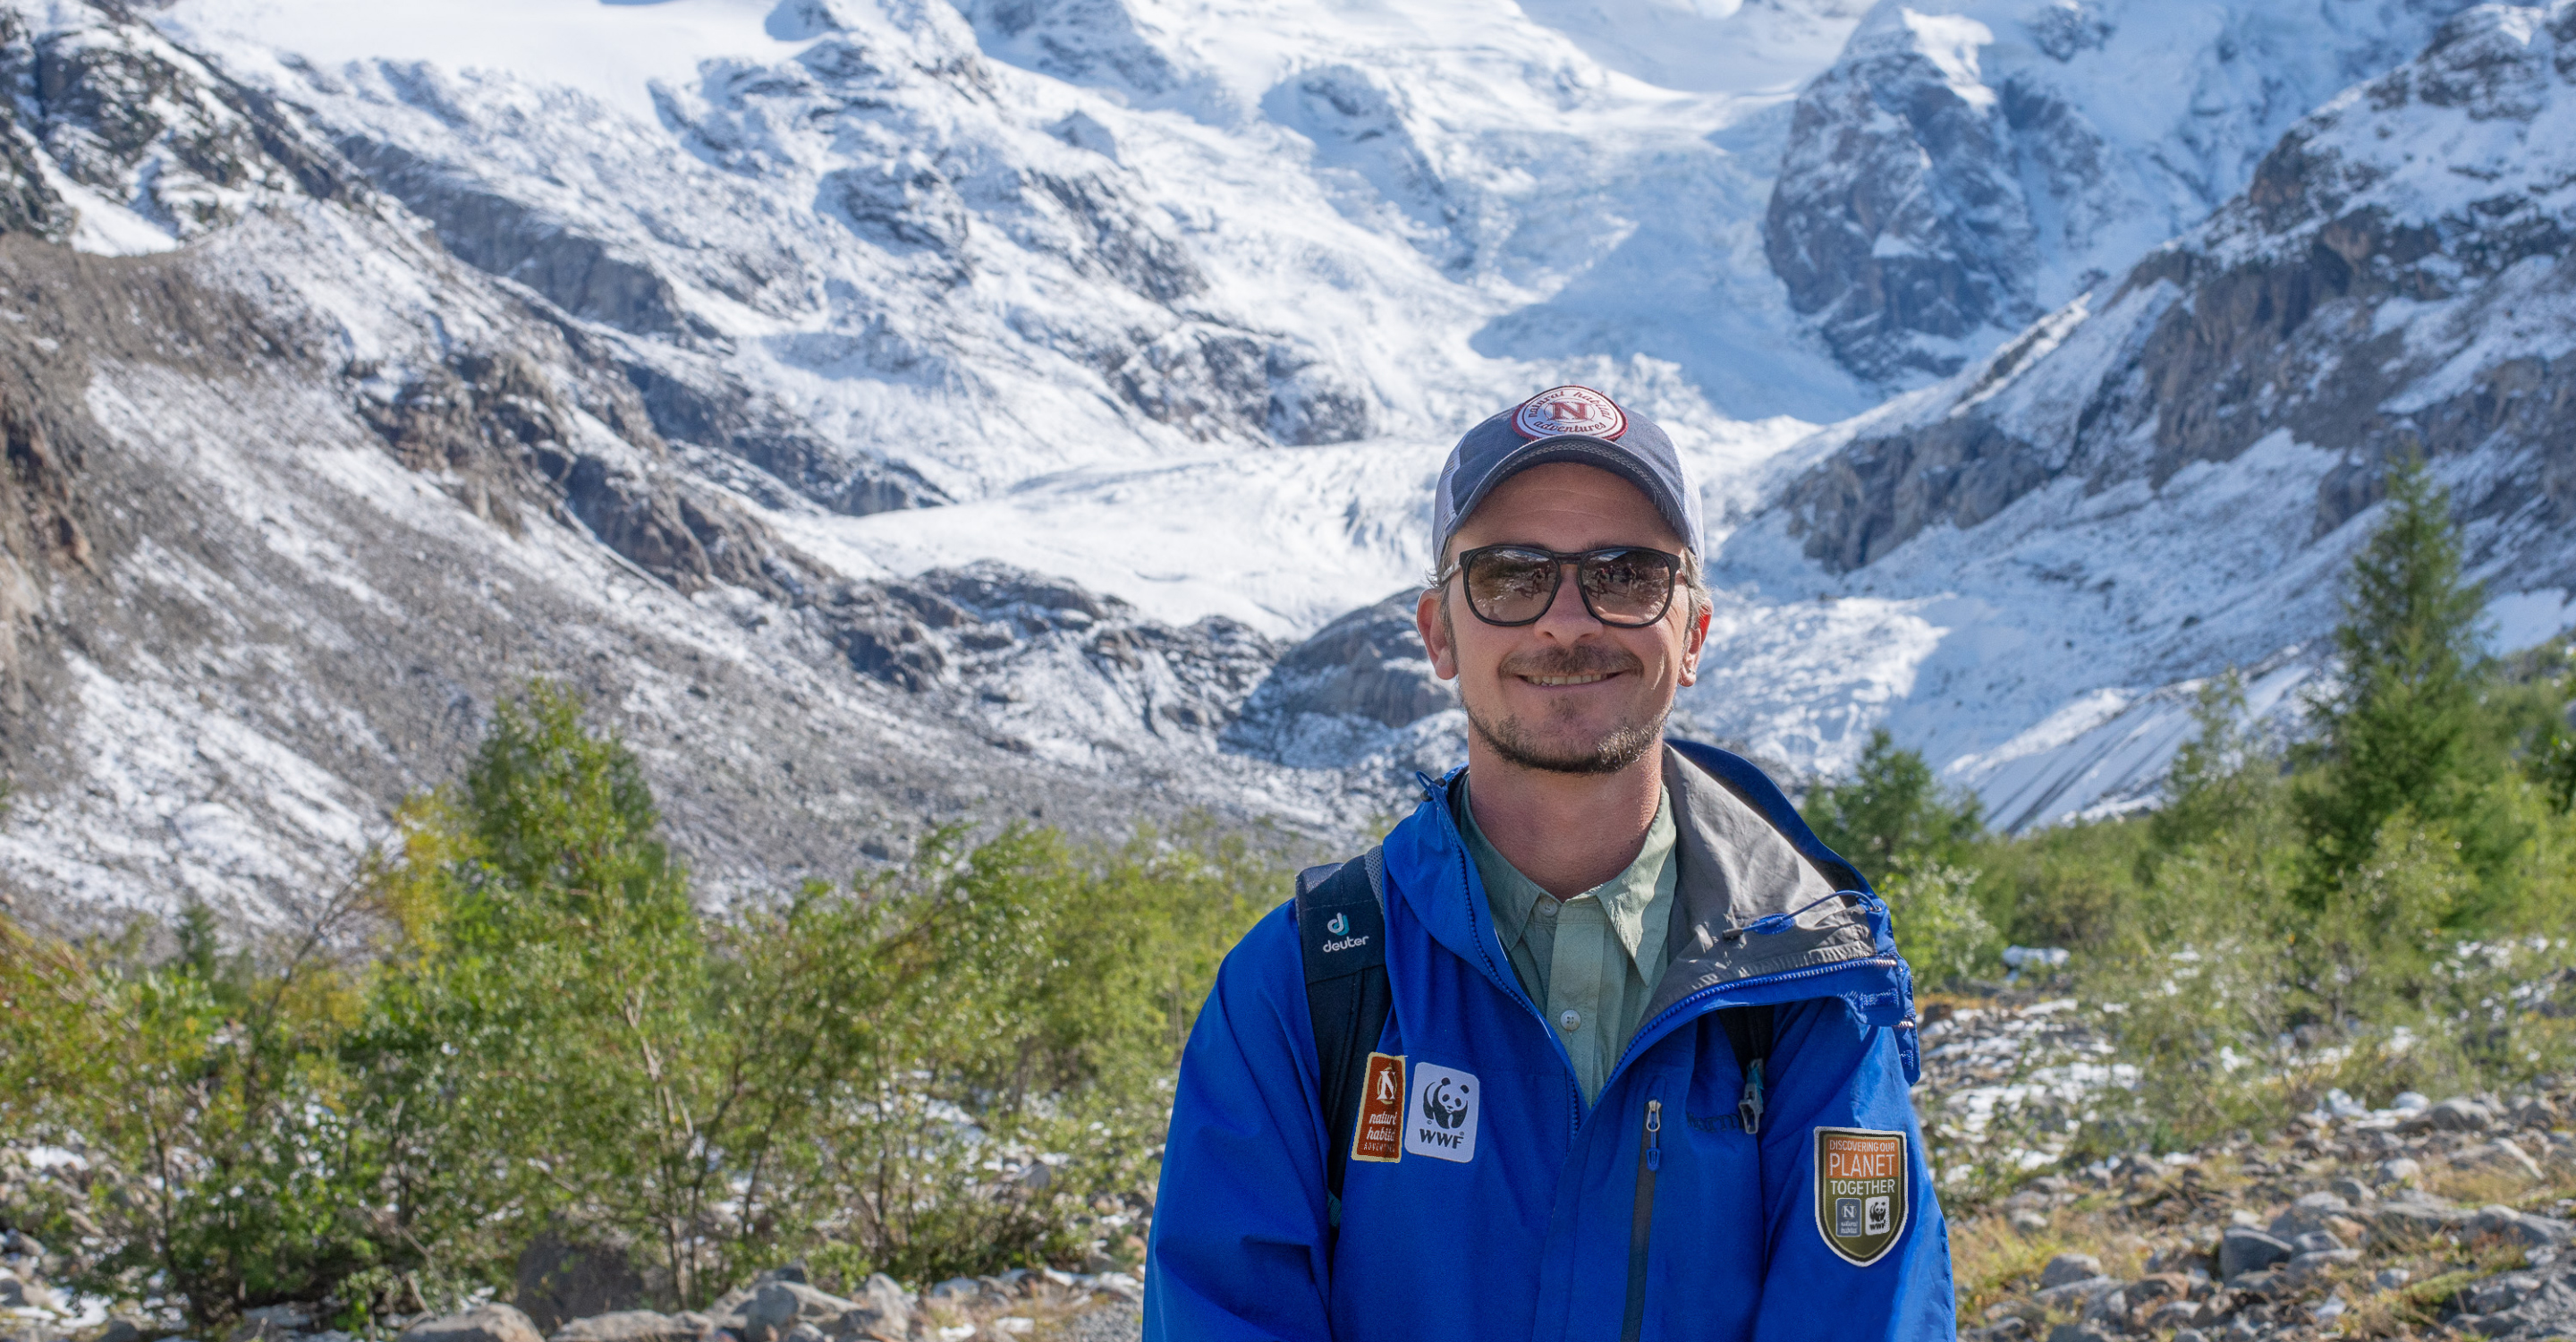 A Natural Habitat Adventures guide smiles in front of Gorner Glacier, Switzerland